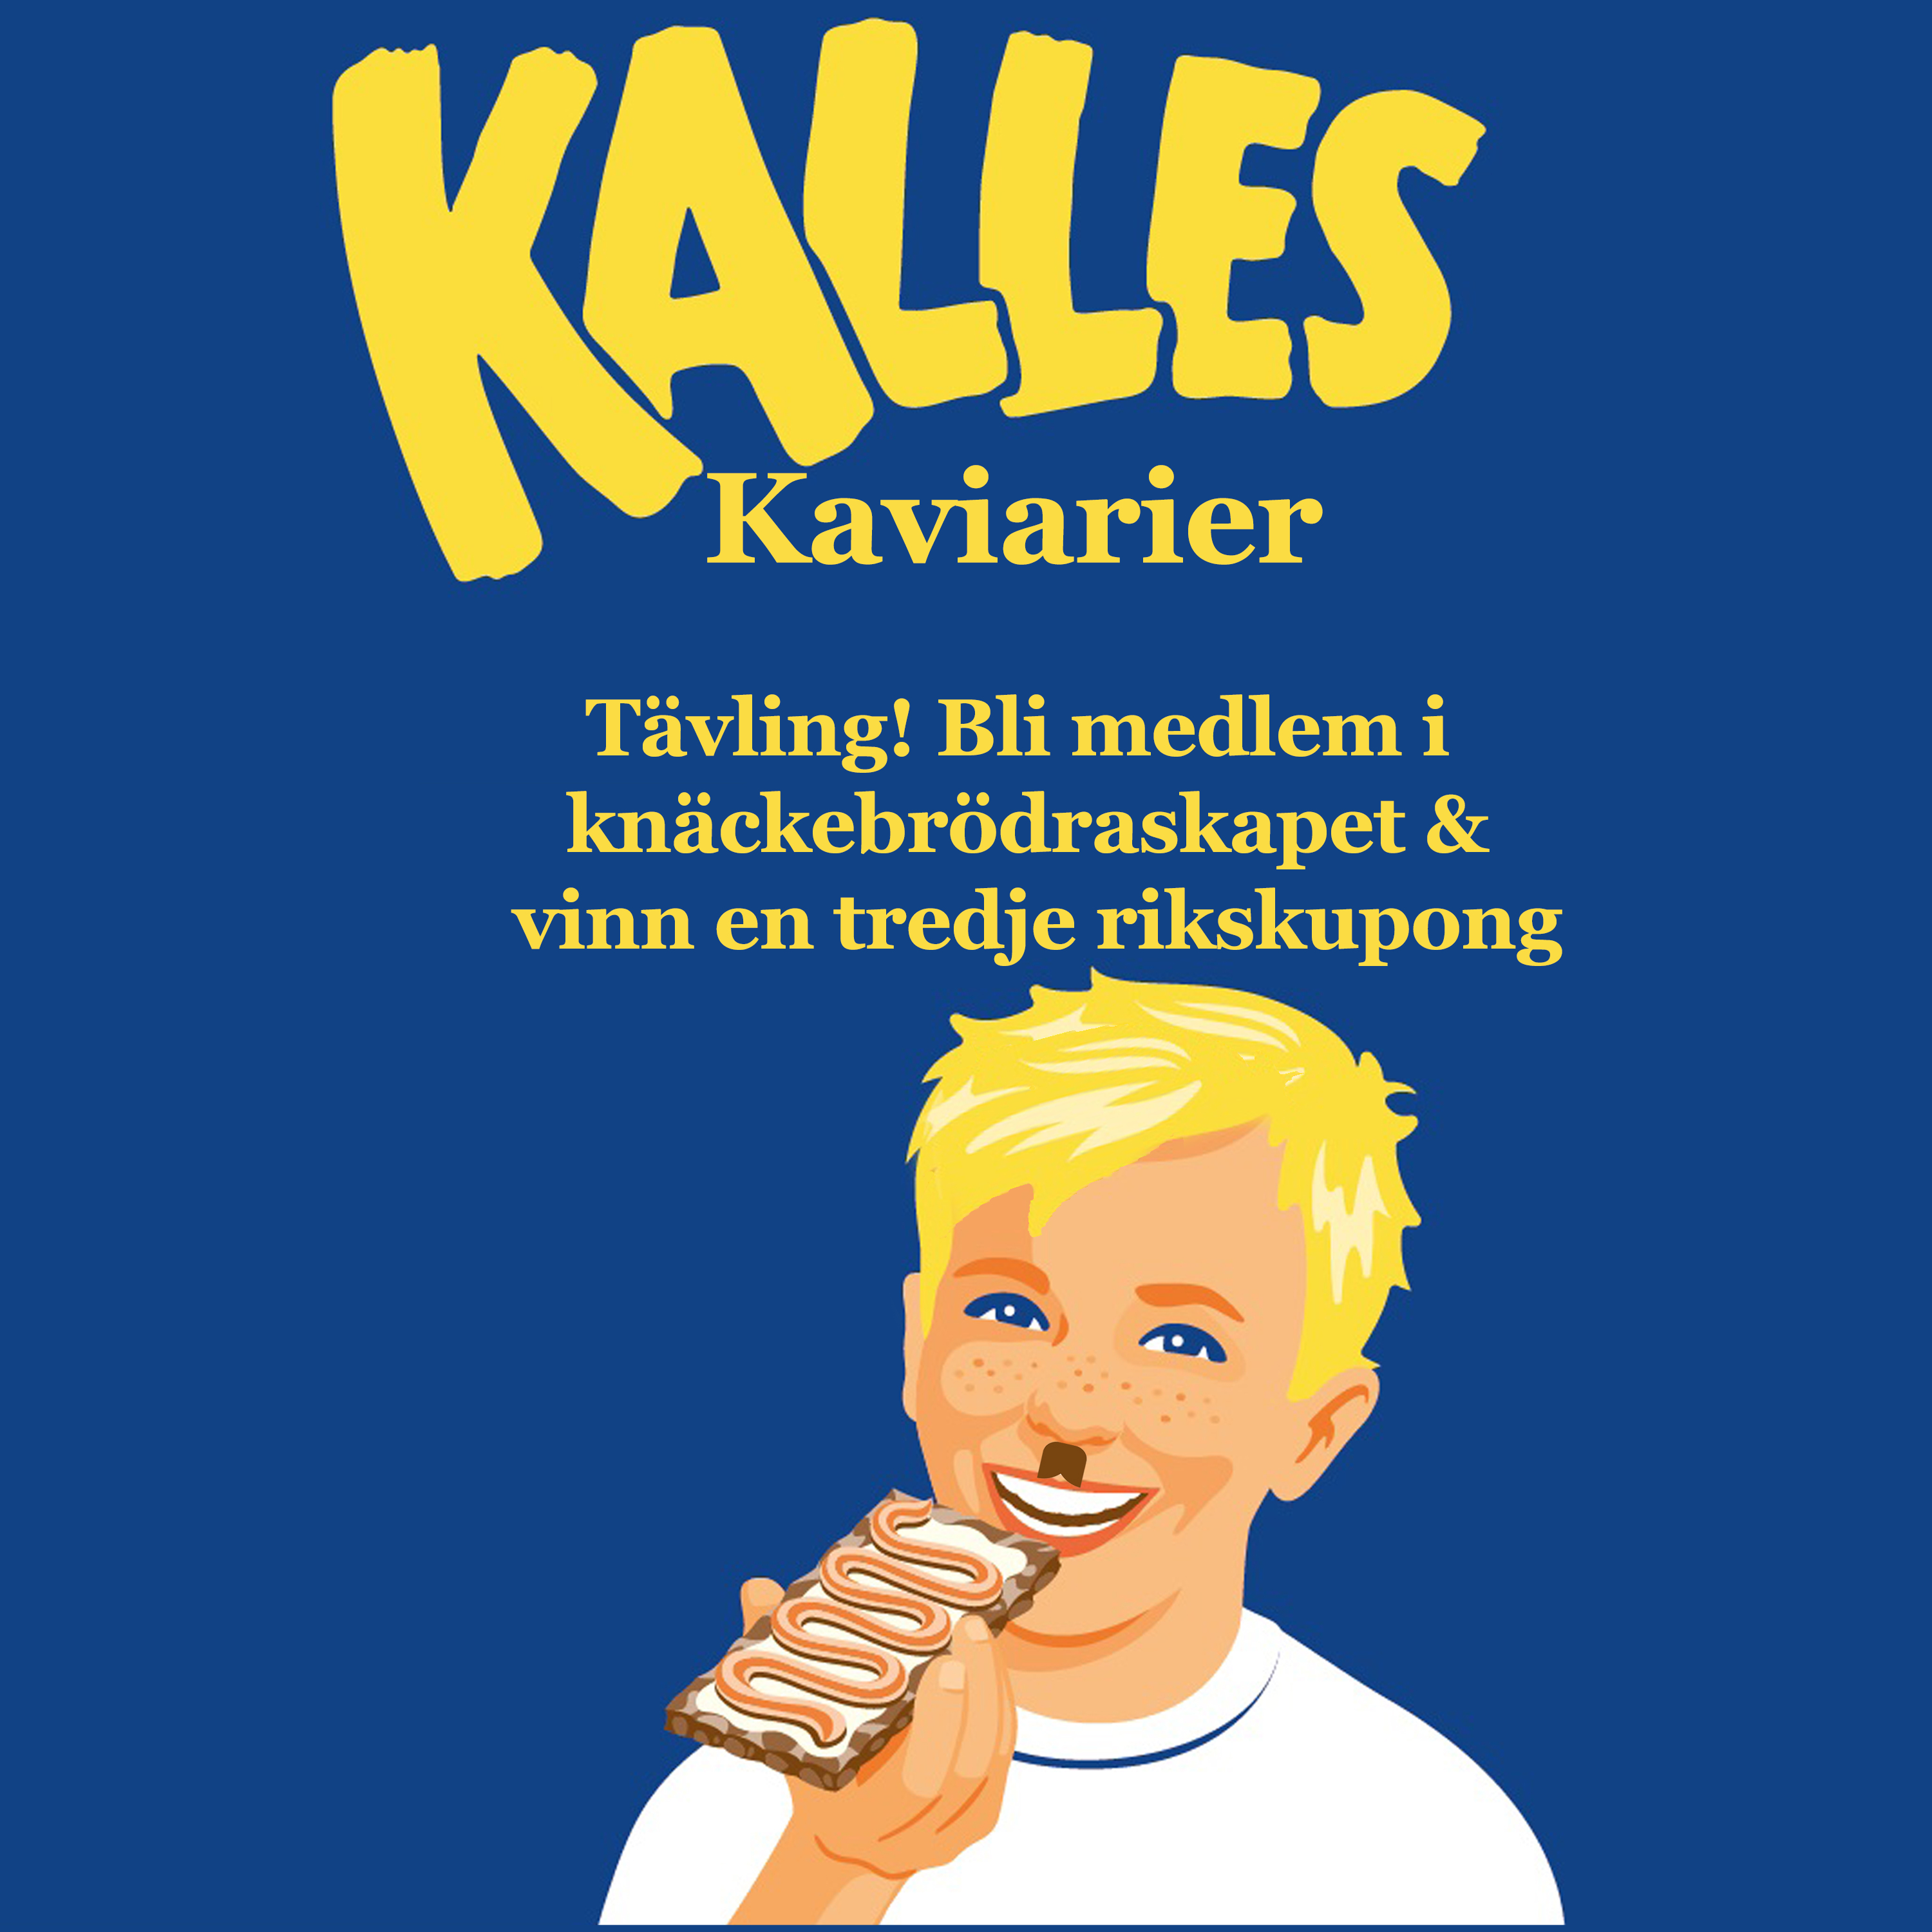 Kalles-Kaviarier